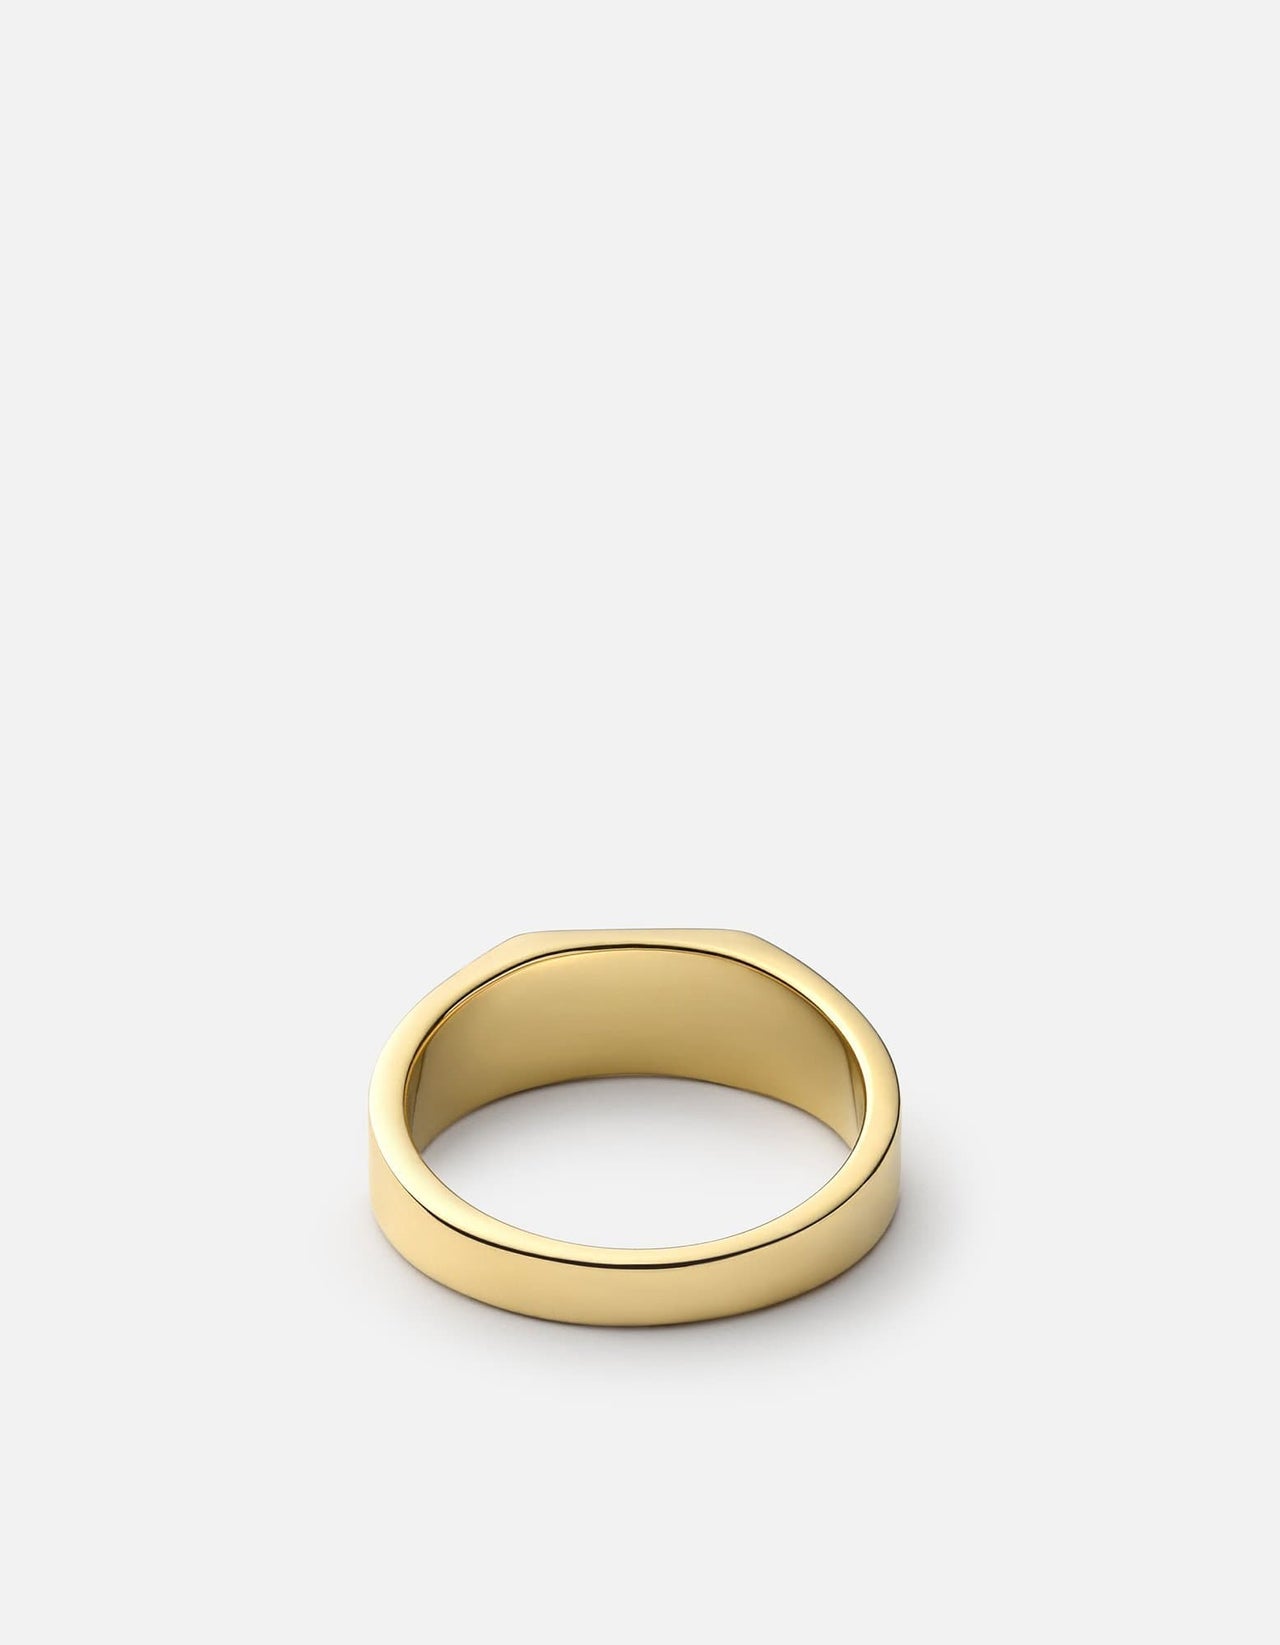 Miansai - Geo Signet ring, gold and diamond